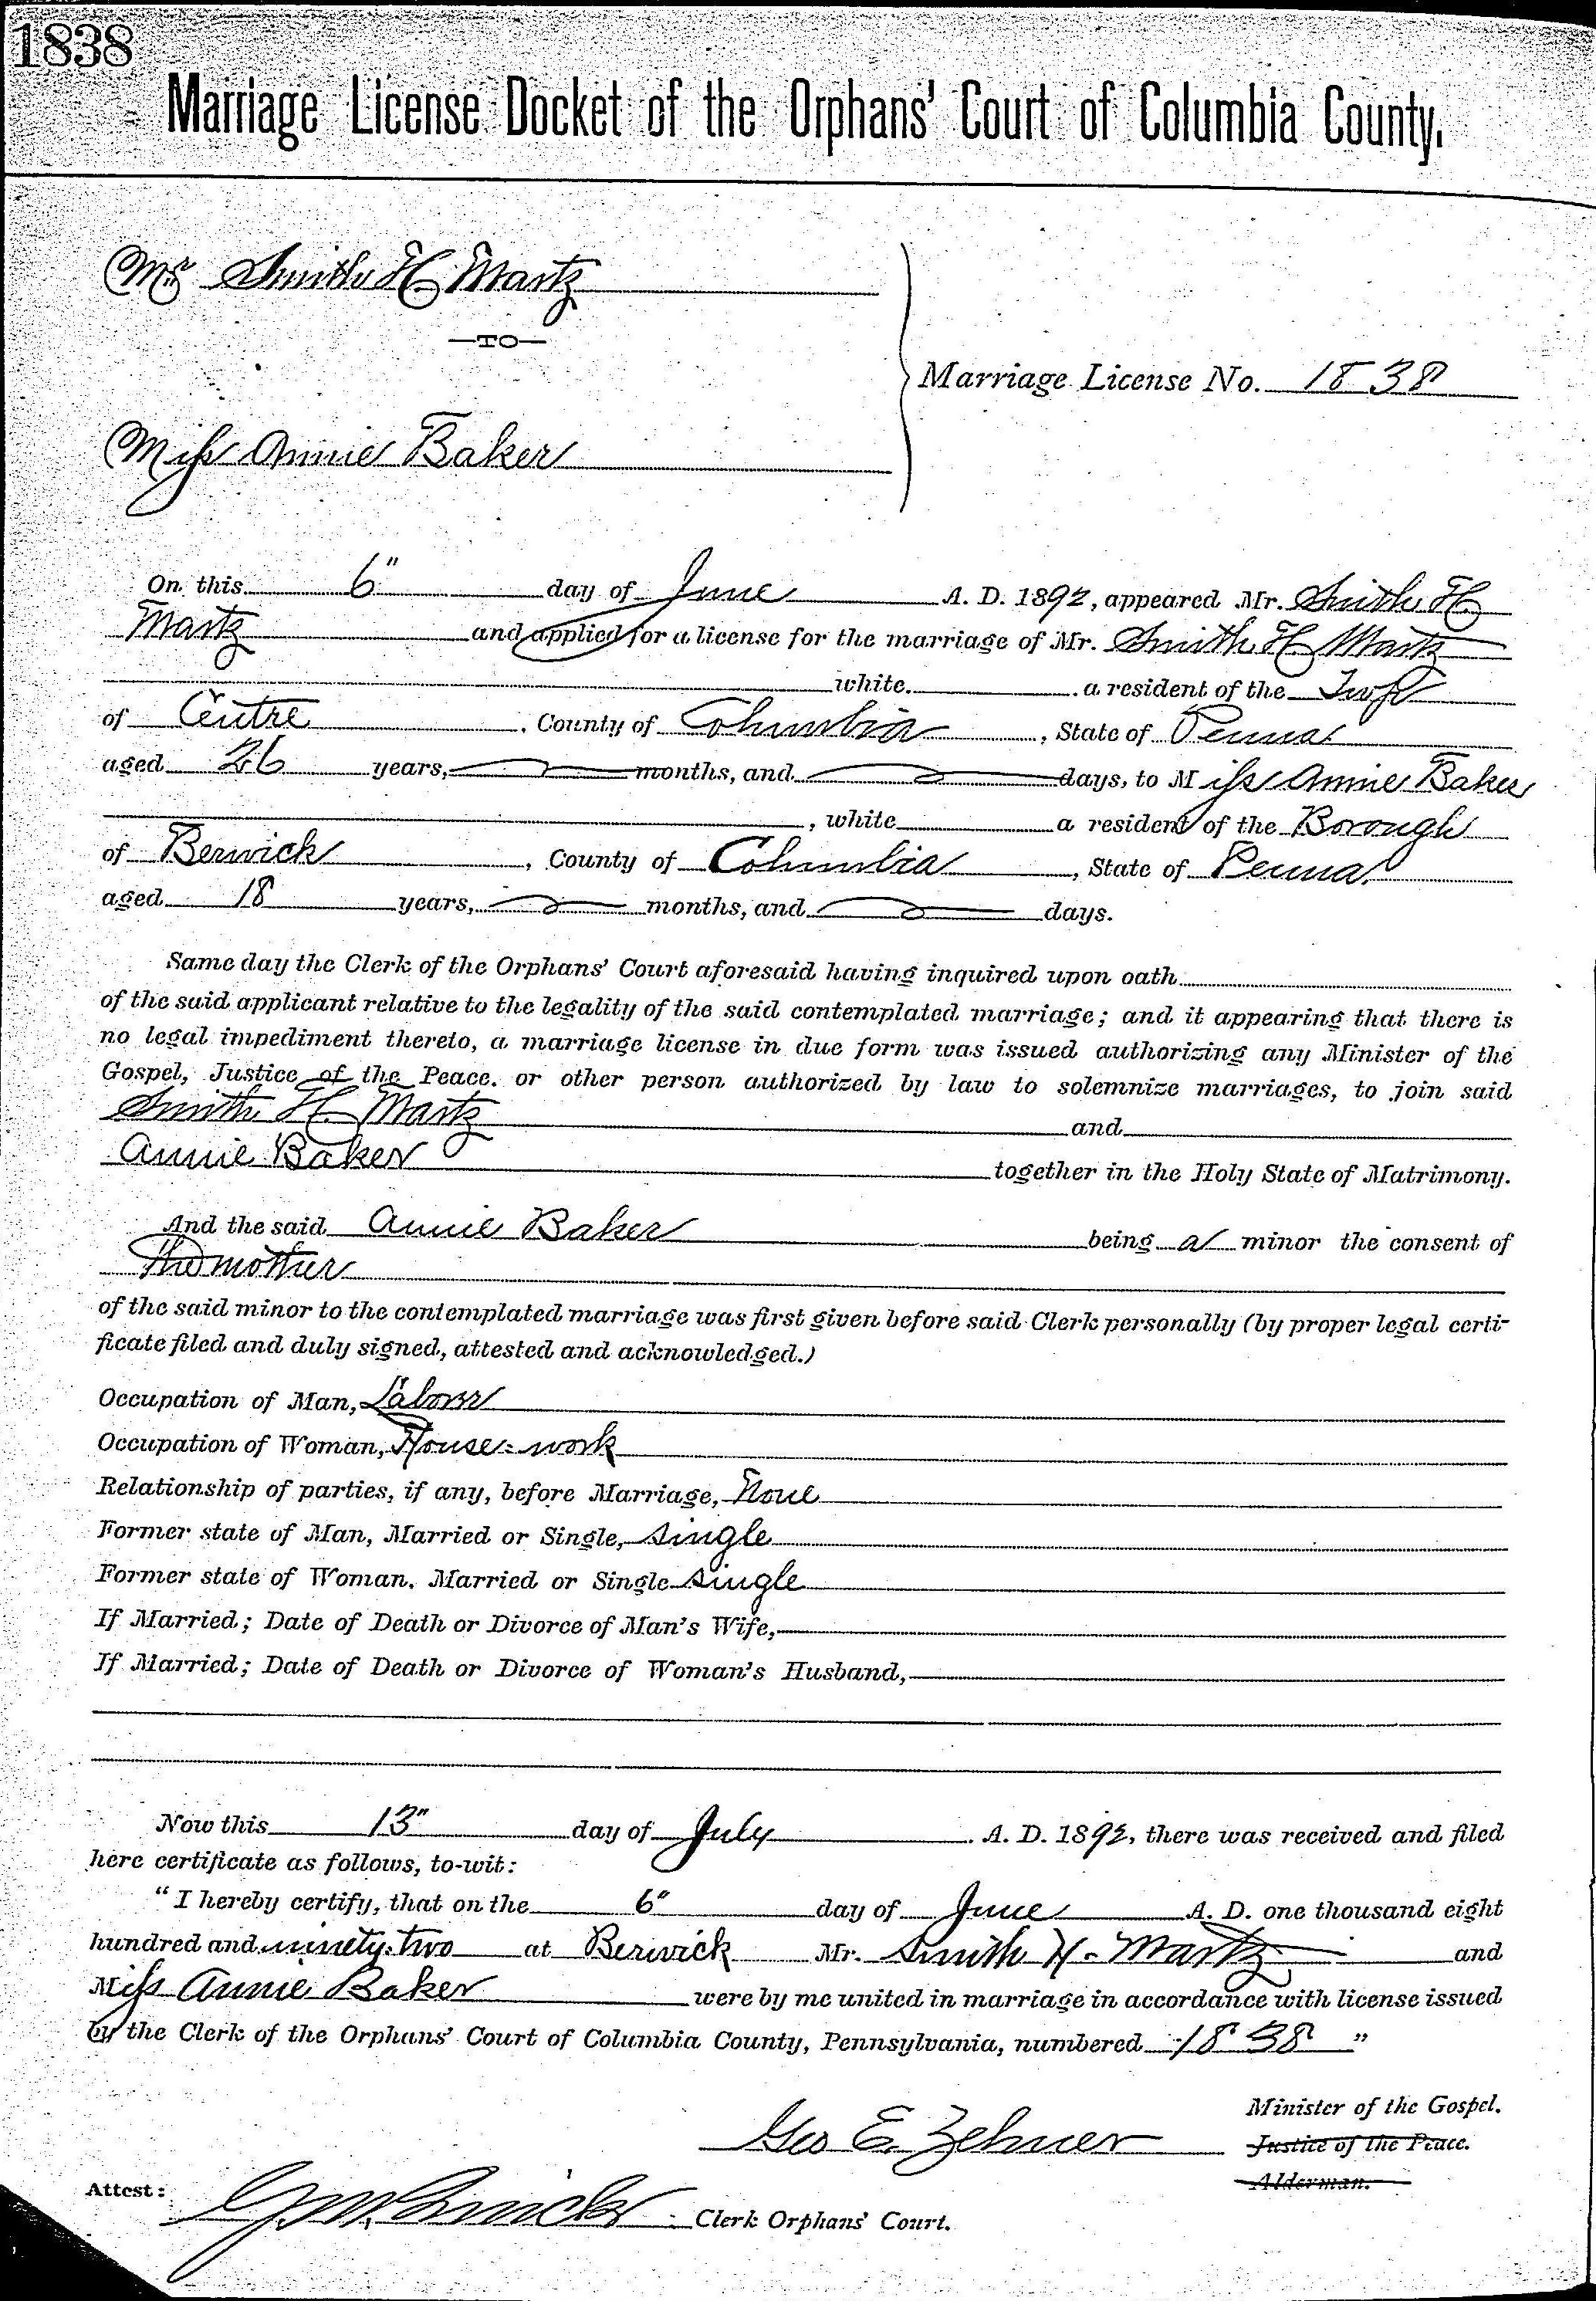 Smith & Mary (Baker) Martz marriage license